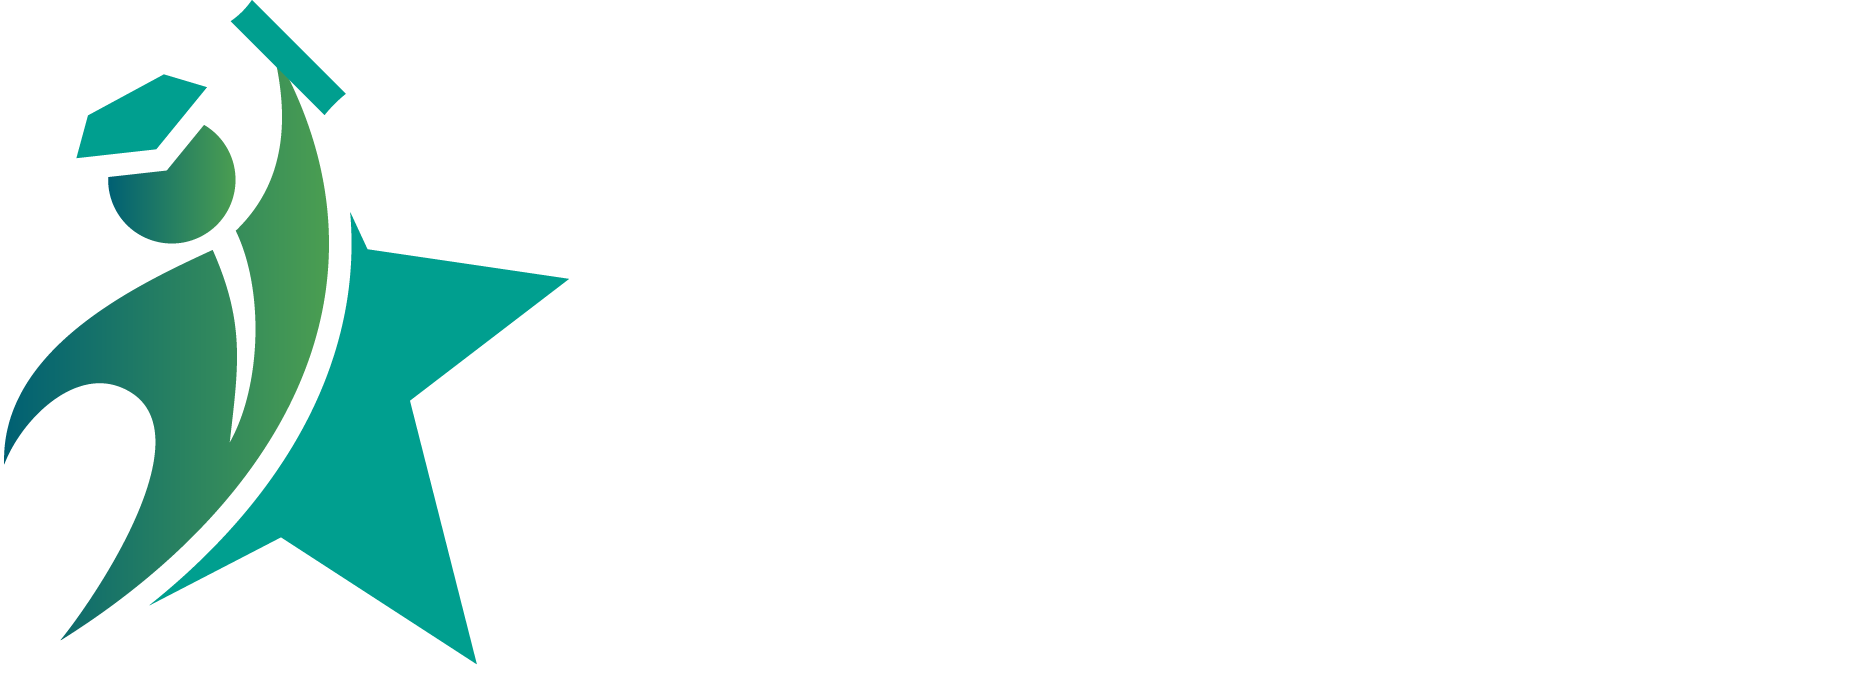 Pathways to College